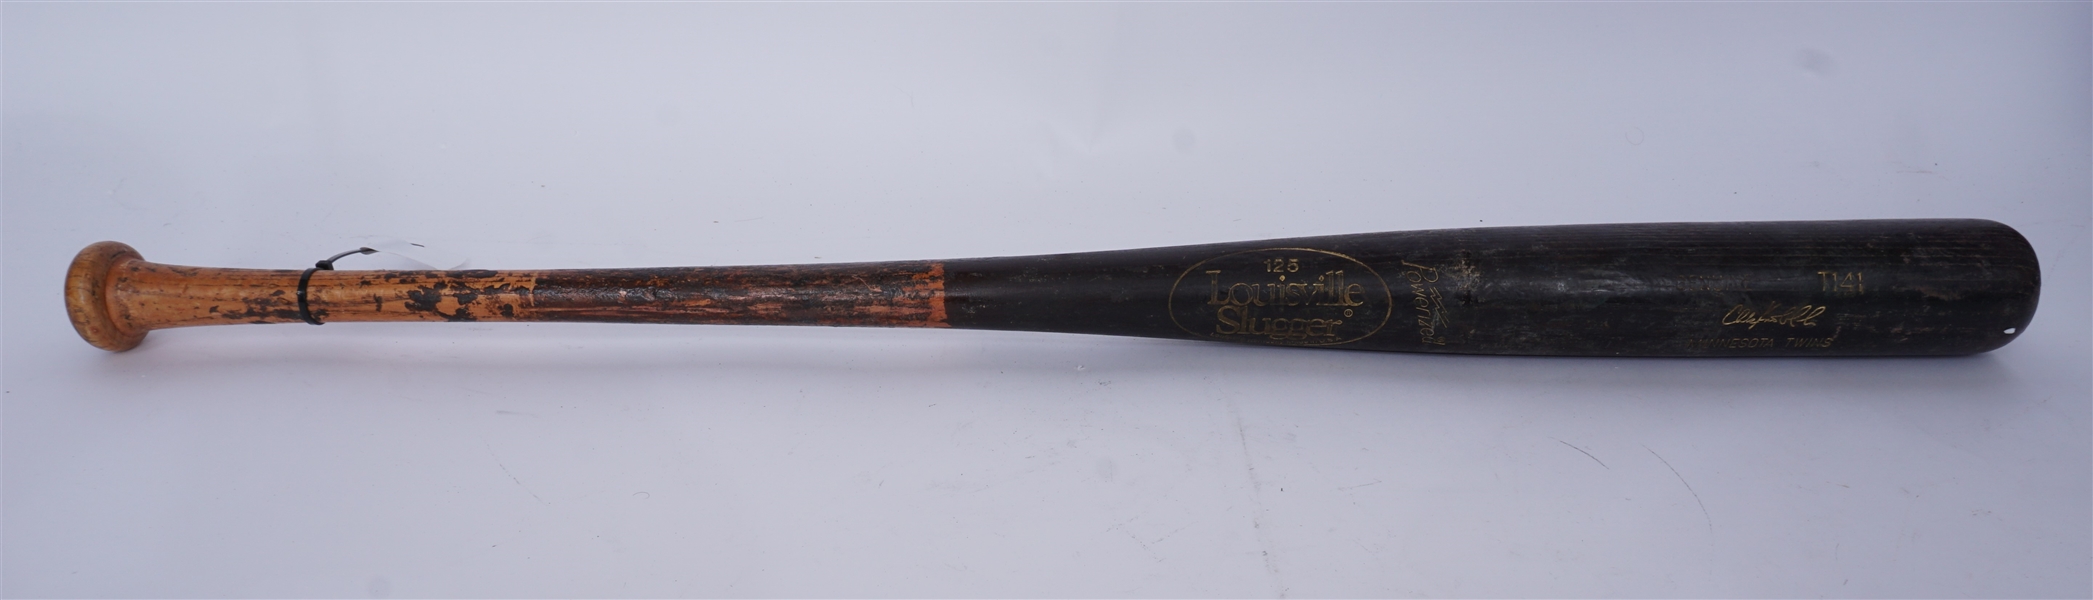 Chuck Knoblauch Minnesota Twins Game Used Bat